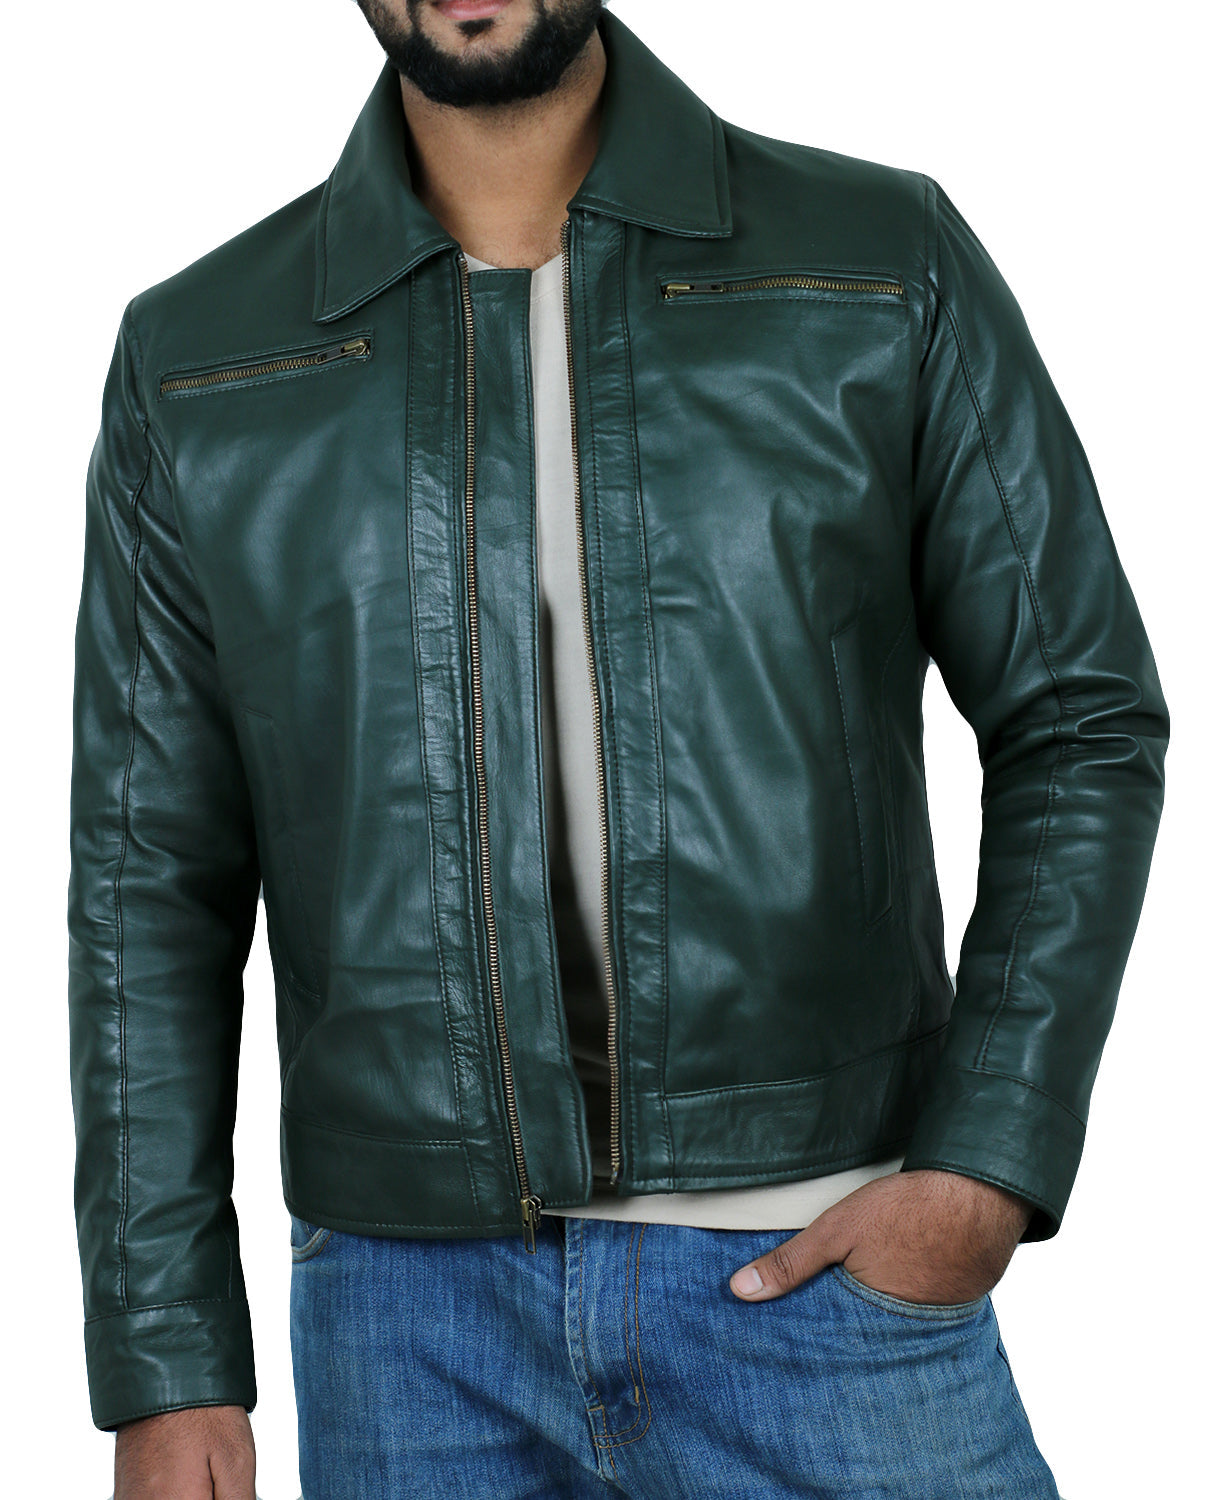 Leather Jackets Hub Mens Genuine Lambskin Leather Jacket (Black, Aviator Jacket) - 1501336